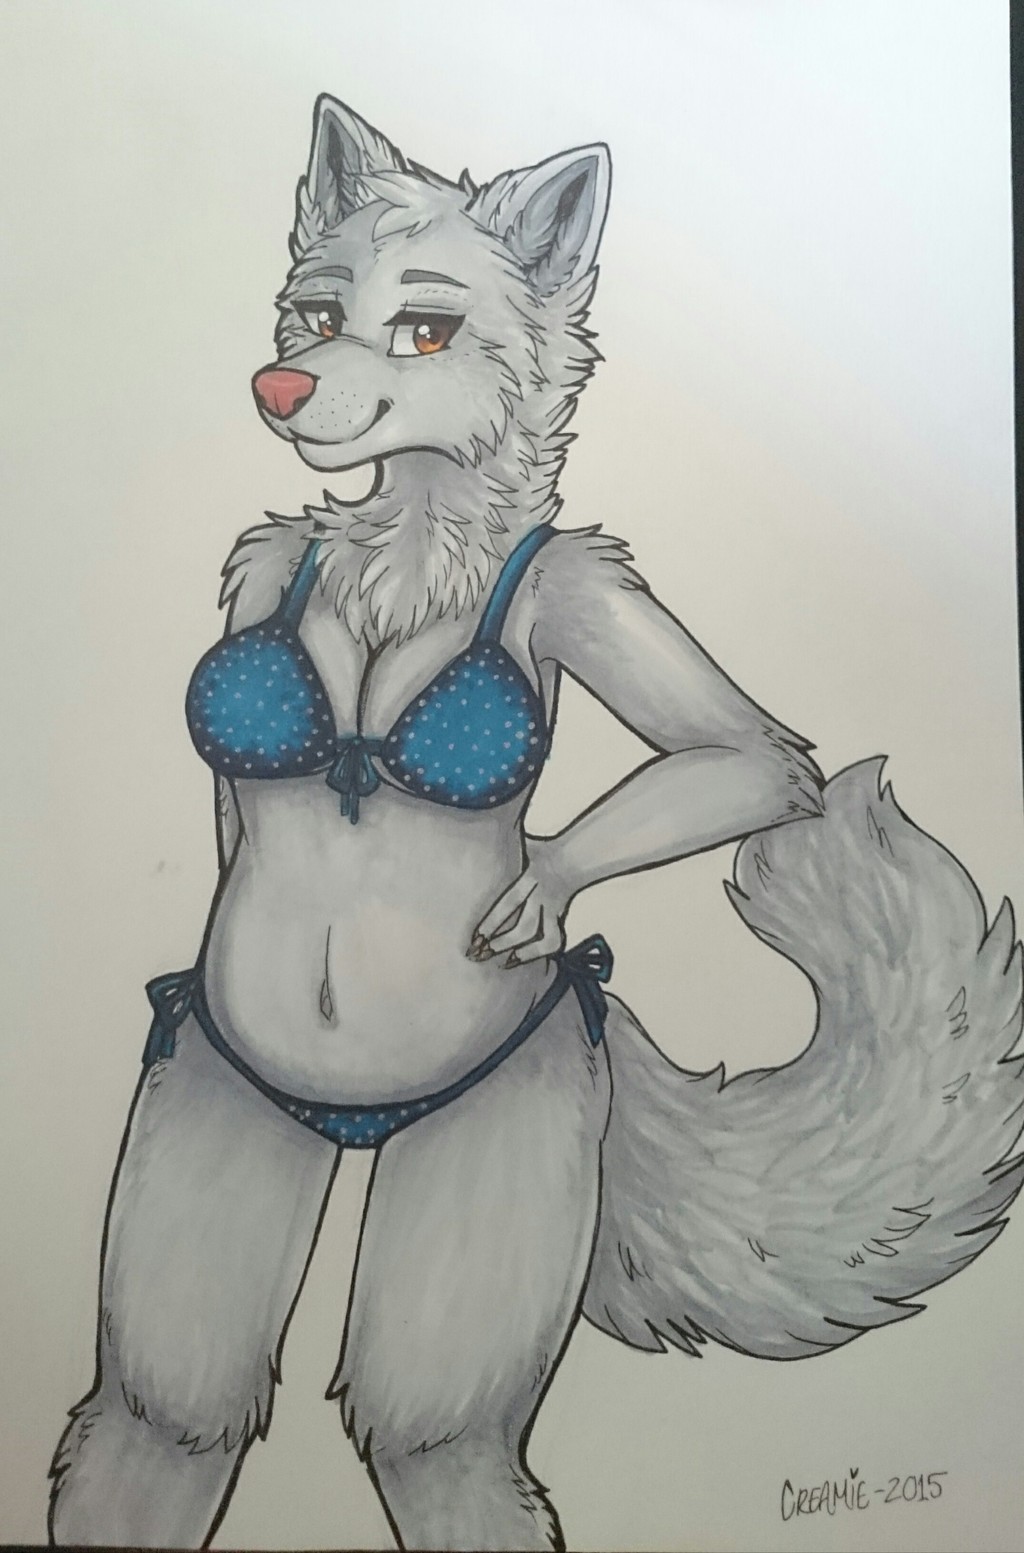 Most recent image: Bikini White wolf